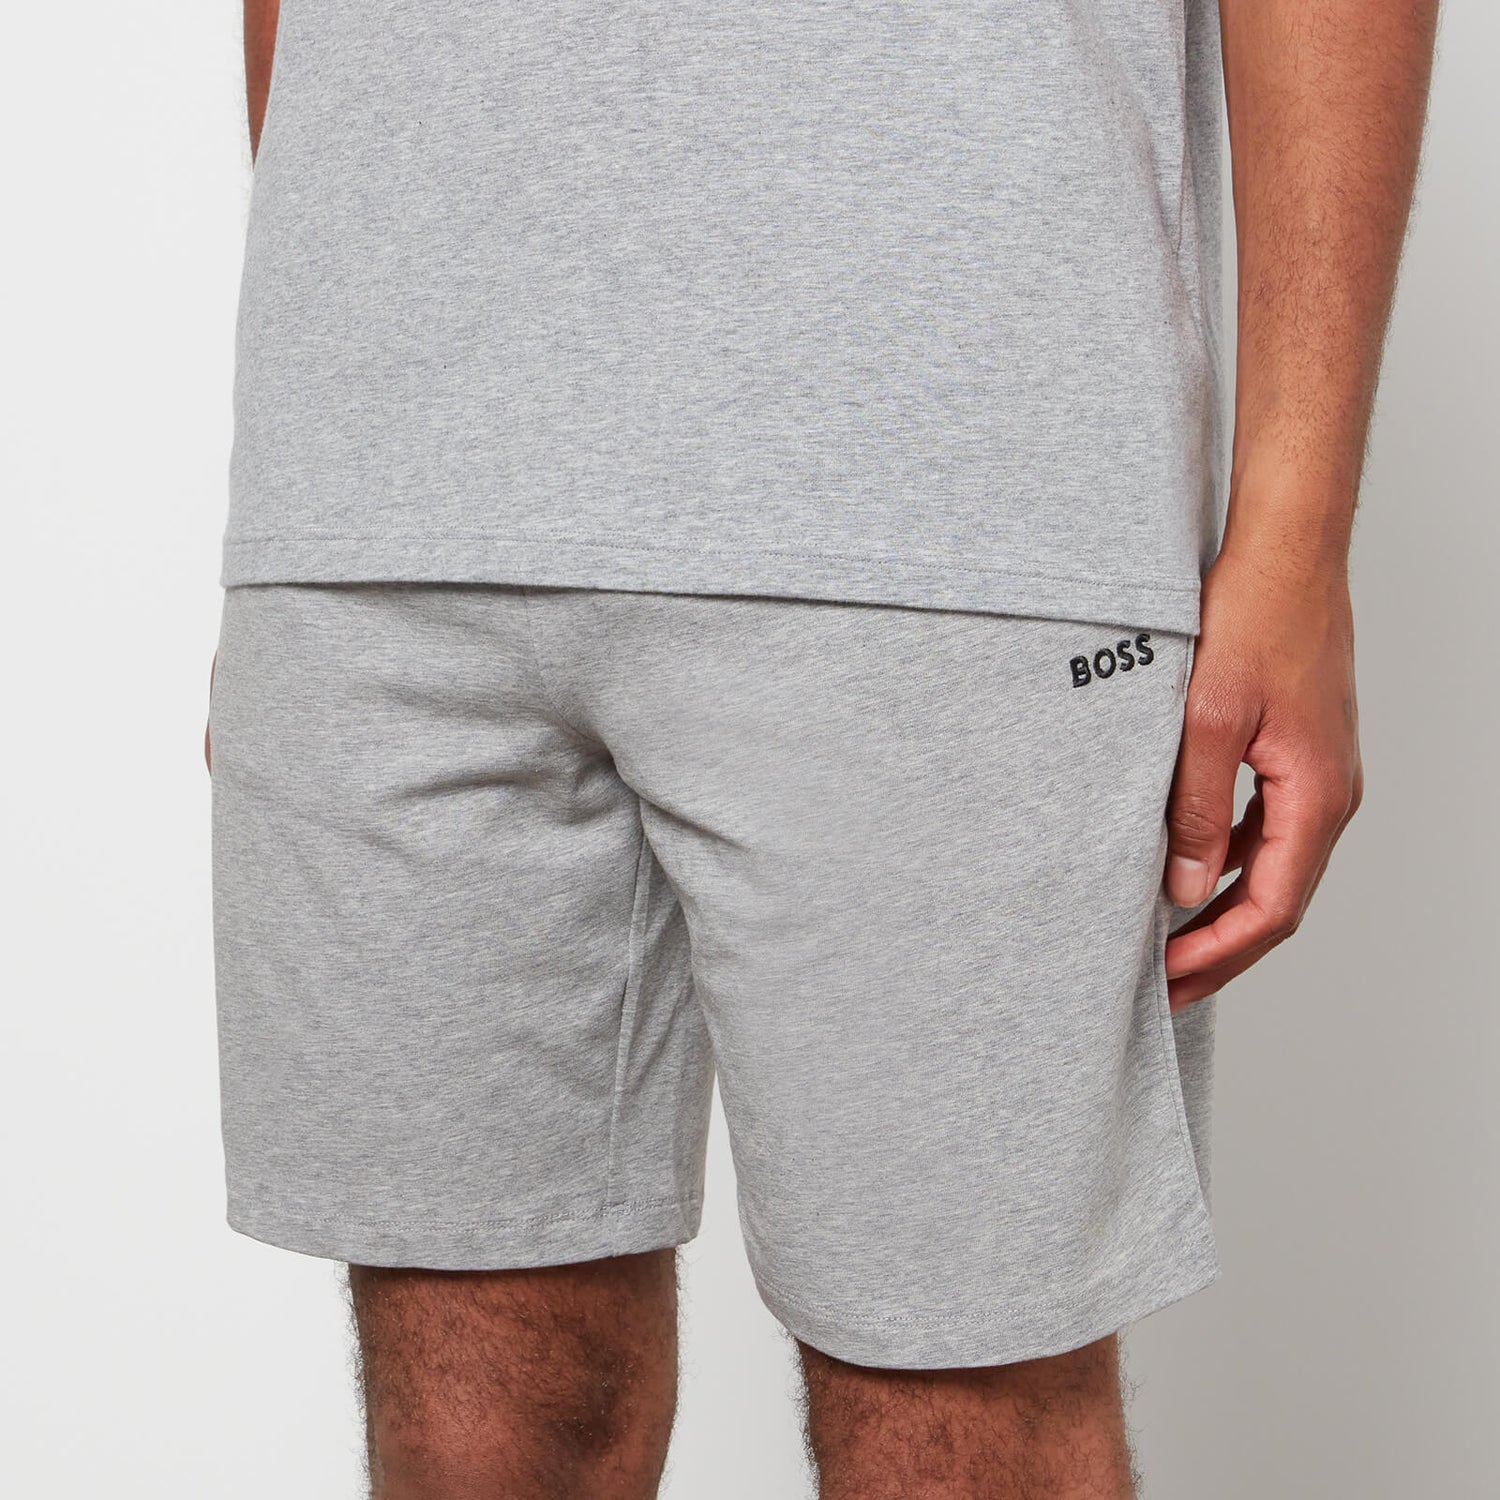 BOSS Bodywear Men's Mix&Match Shorts - Medium Grey